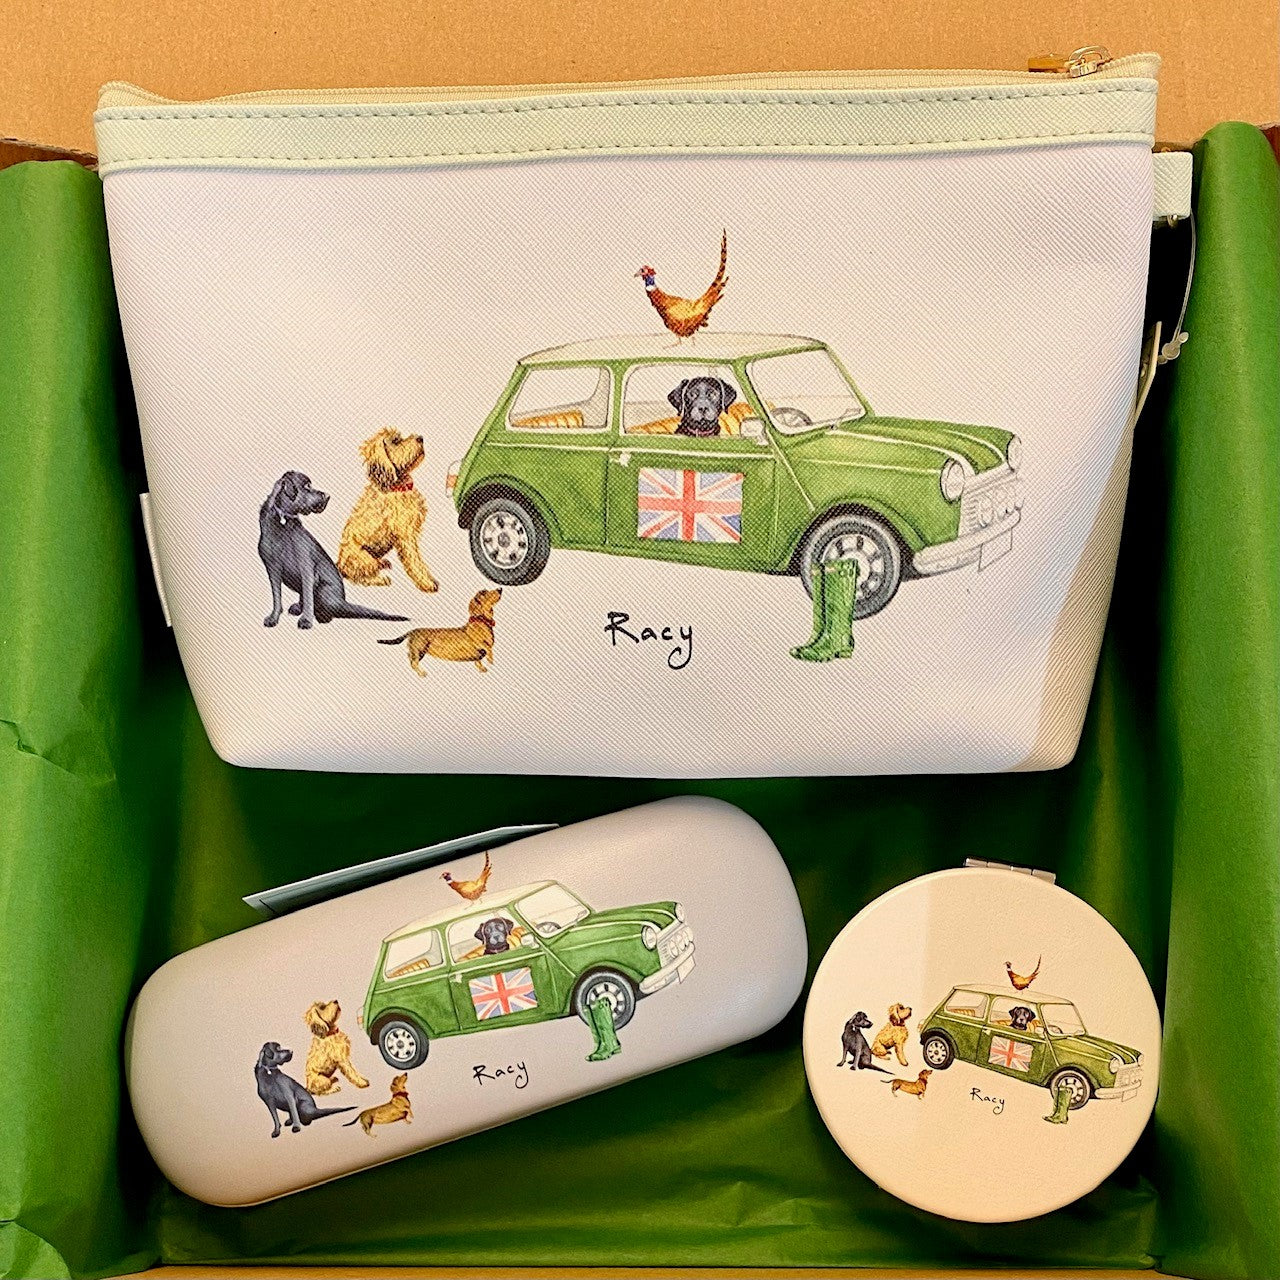 The Mini "Racy" Make Up Bag, Glasses Case & Compact Gift Box Set